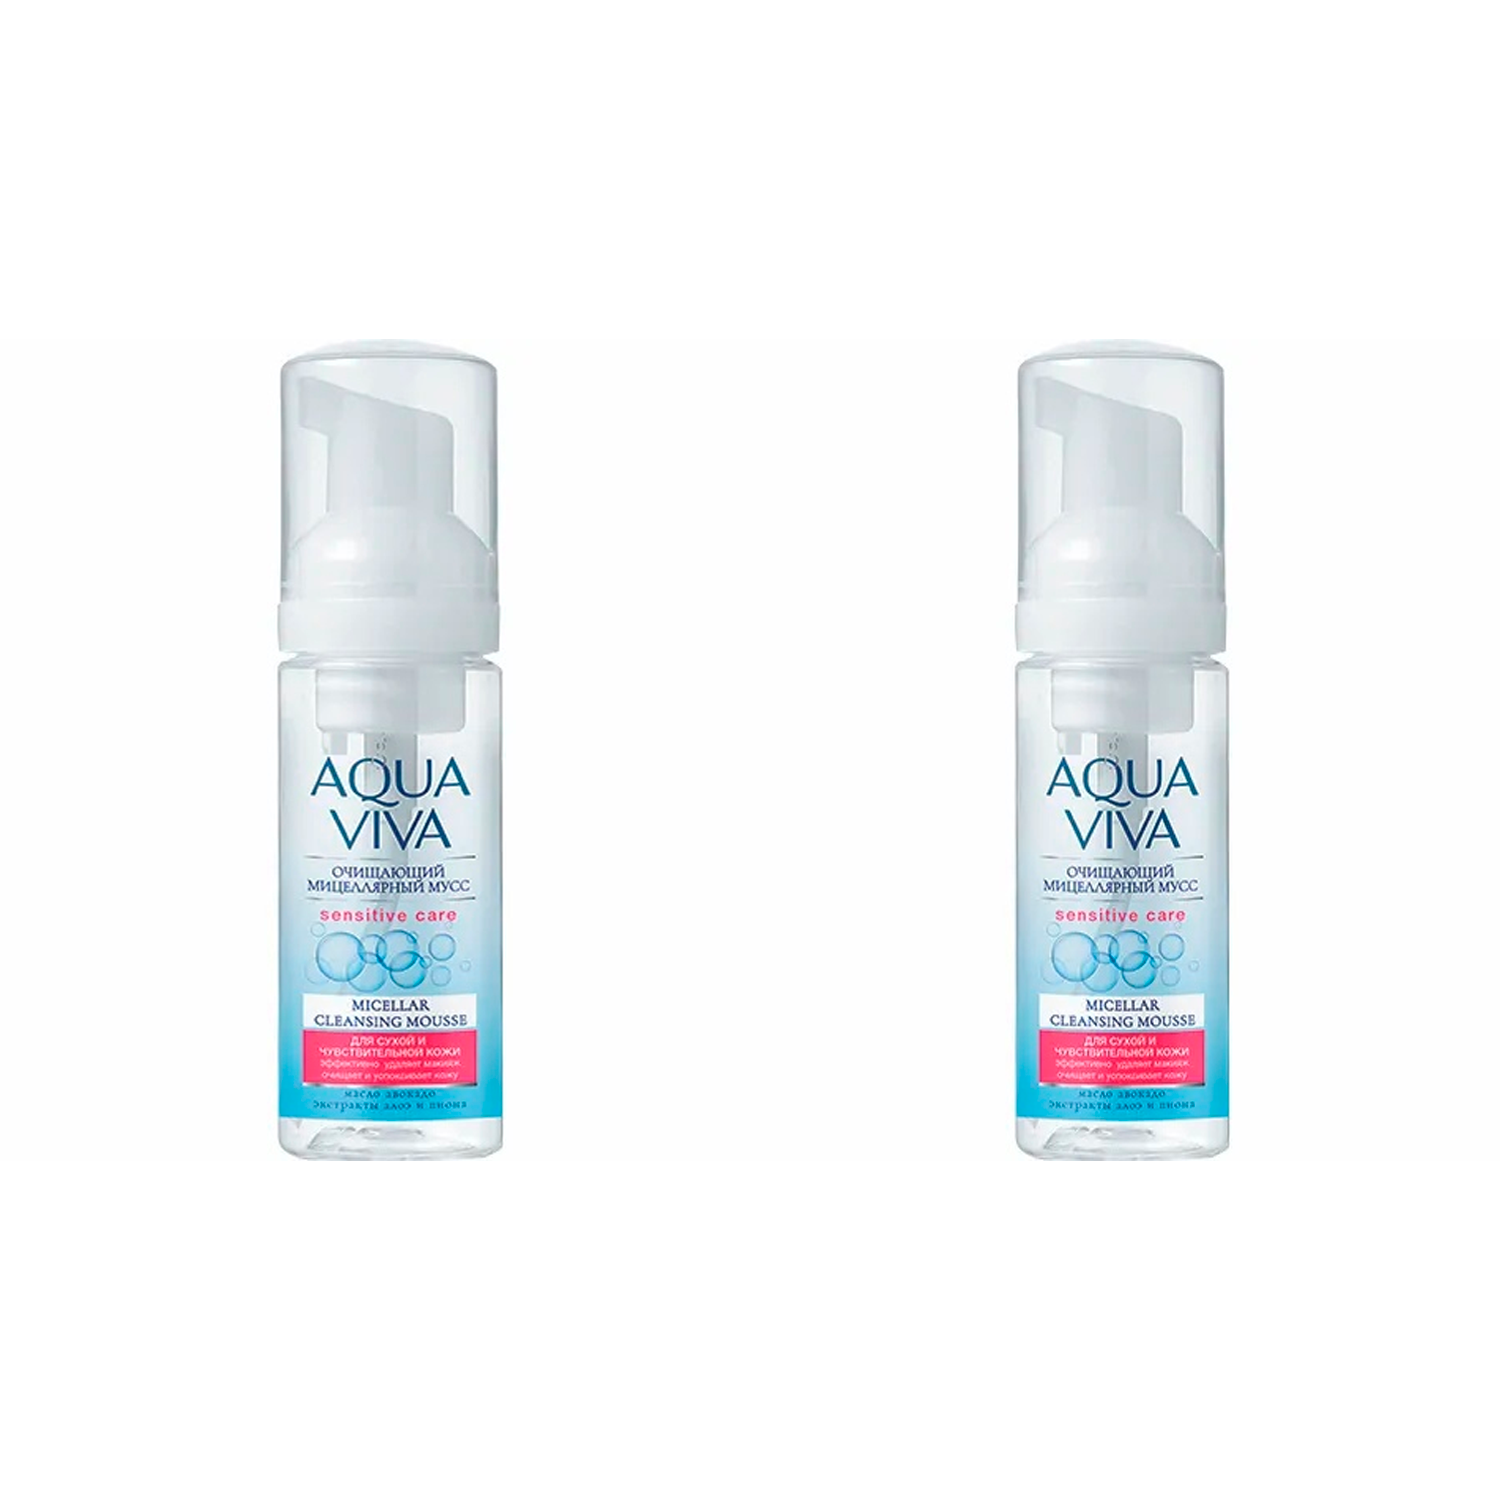 Мицеллярный мусс Romax очищающий для всех типов кожи Aqua Viva, 150 мл х 2 шт.